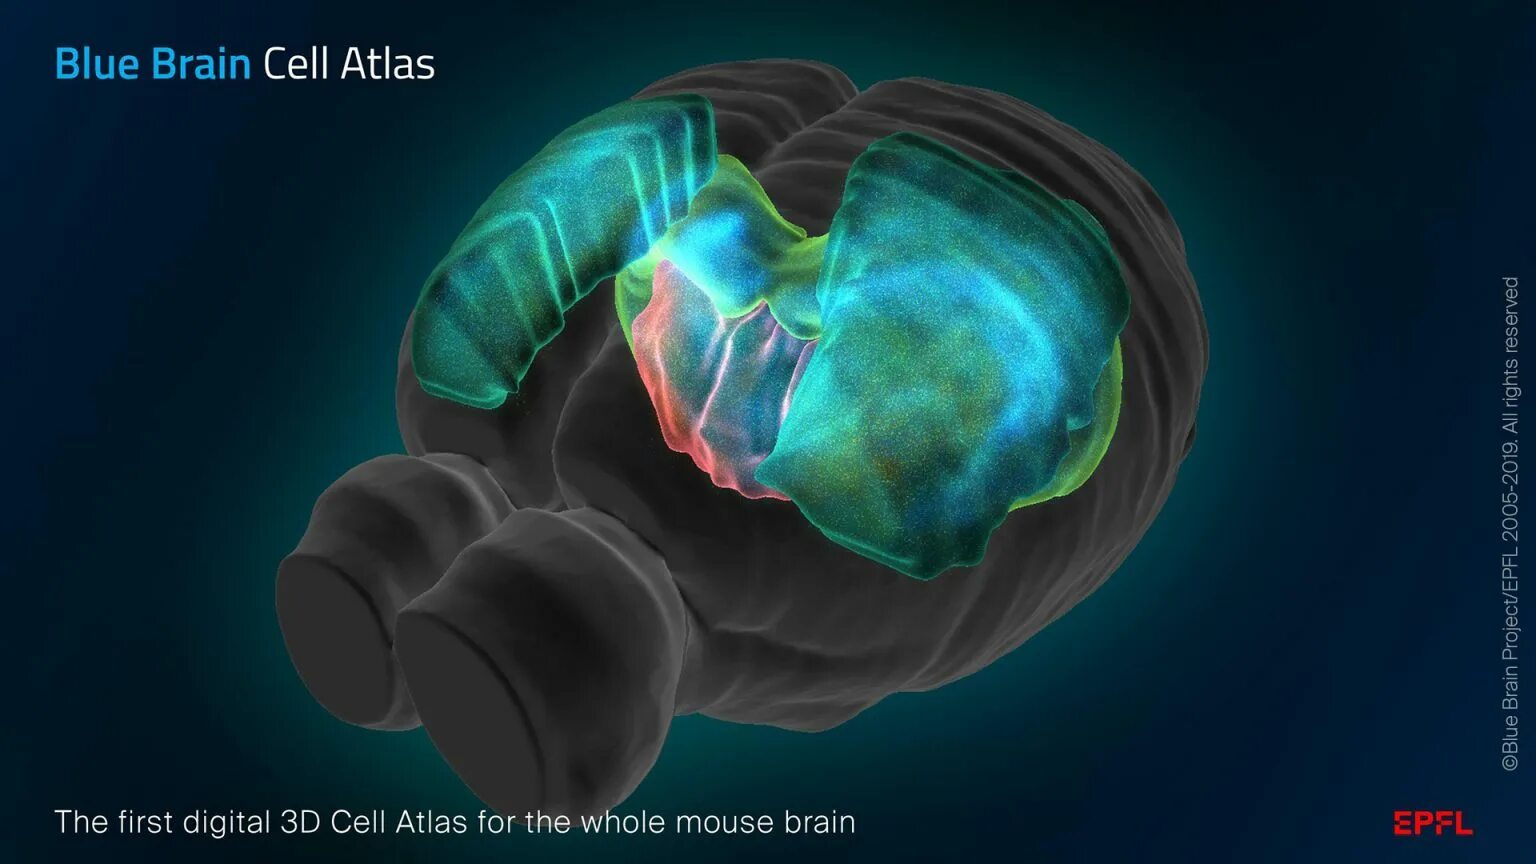 Brain project. Проект голубой мозг. Проект мозг Радевич. Mouse Brain Atlas. Blue Brain Project институт.